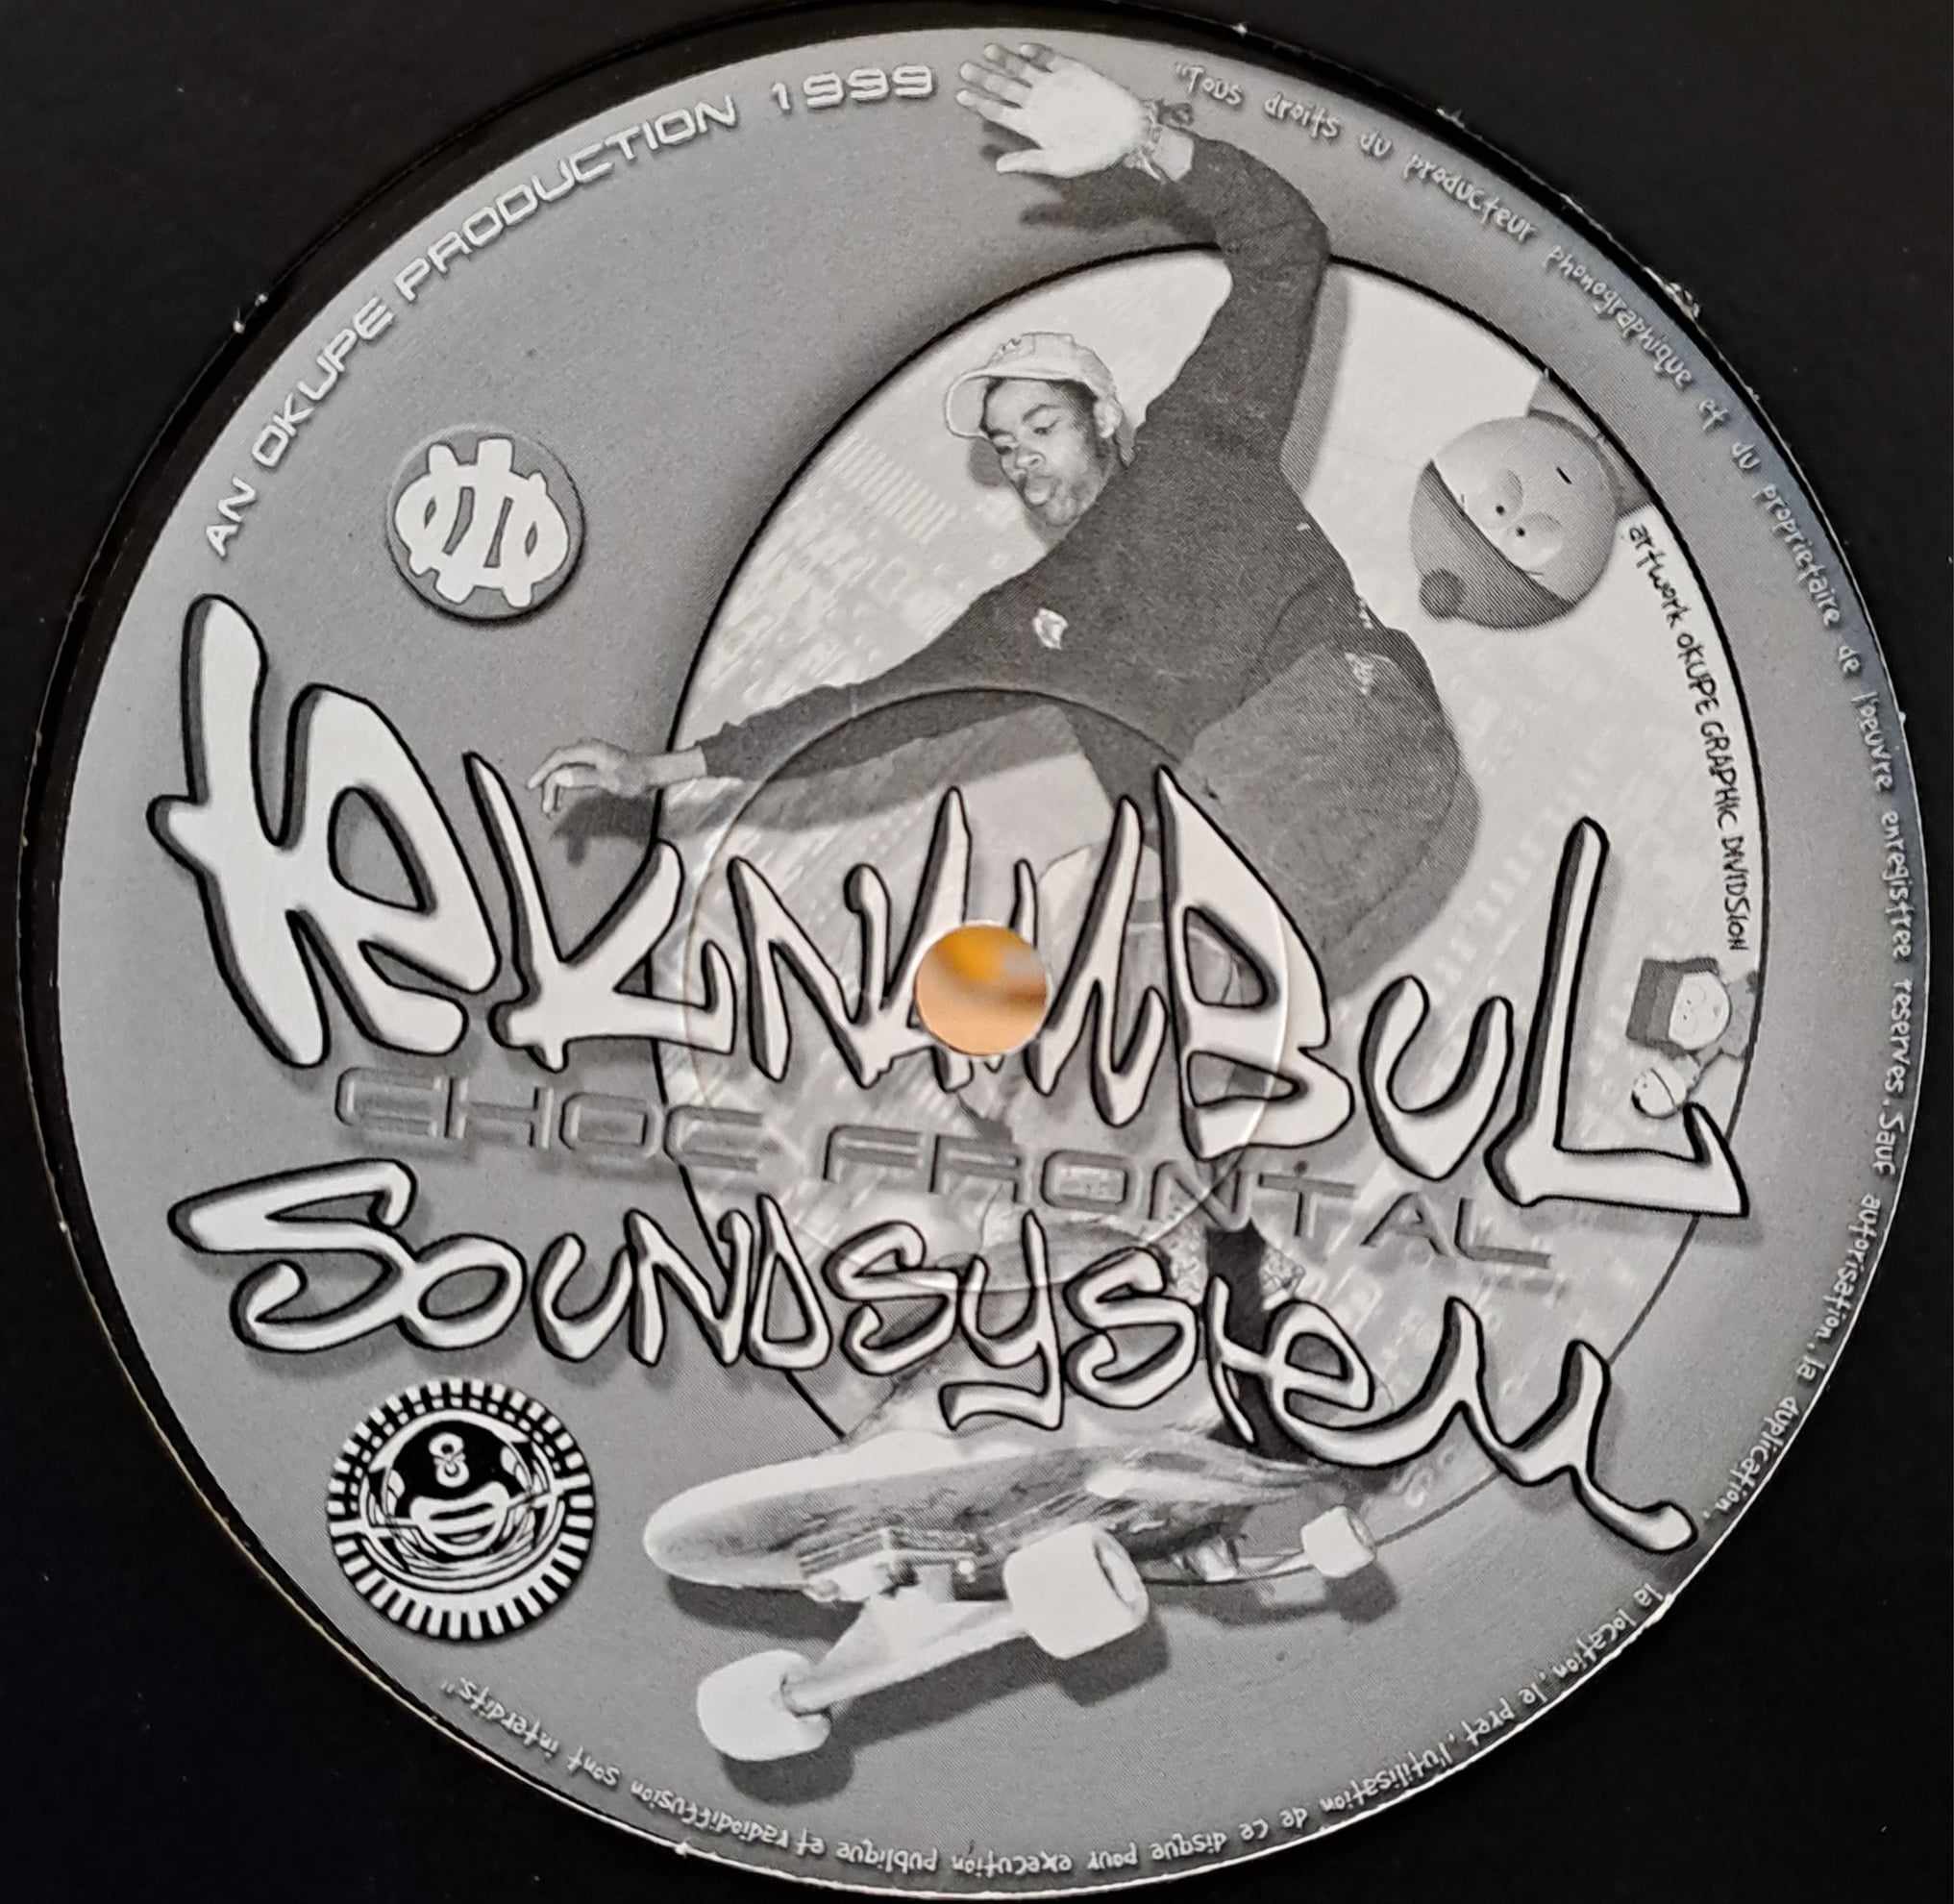 Teknambul 1 (Choc Frontal) - vinyle freetekno